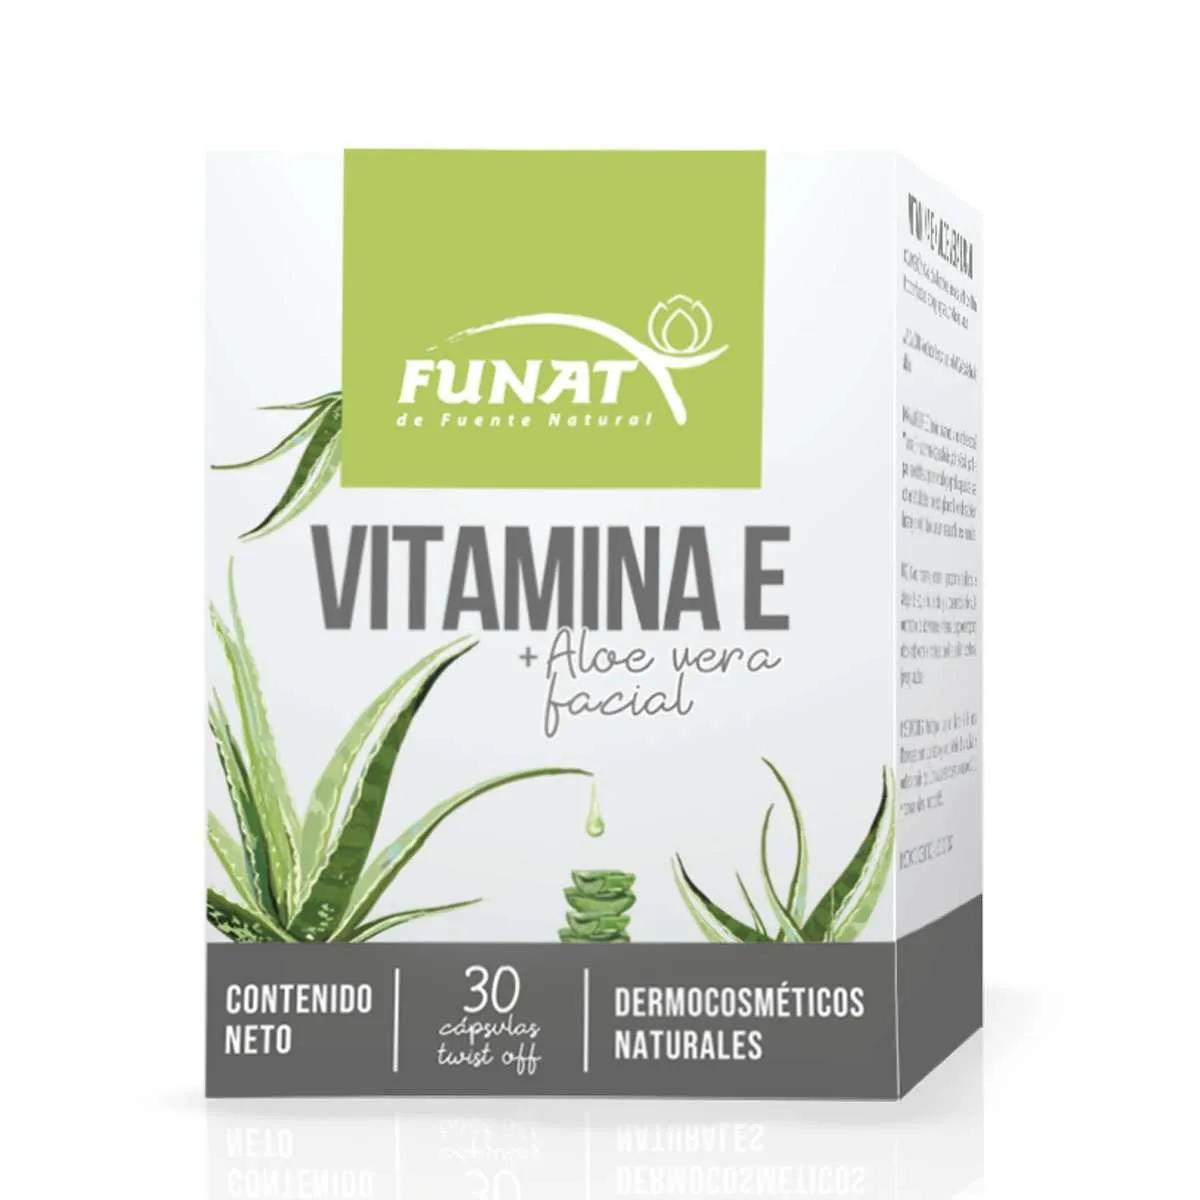 Vitamina E + Aloe vera 30 cápsulas aplicables - Frente del empaque - Funat